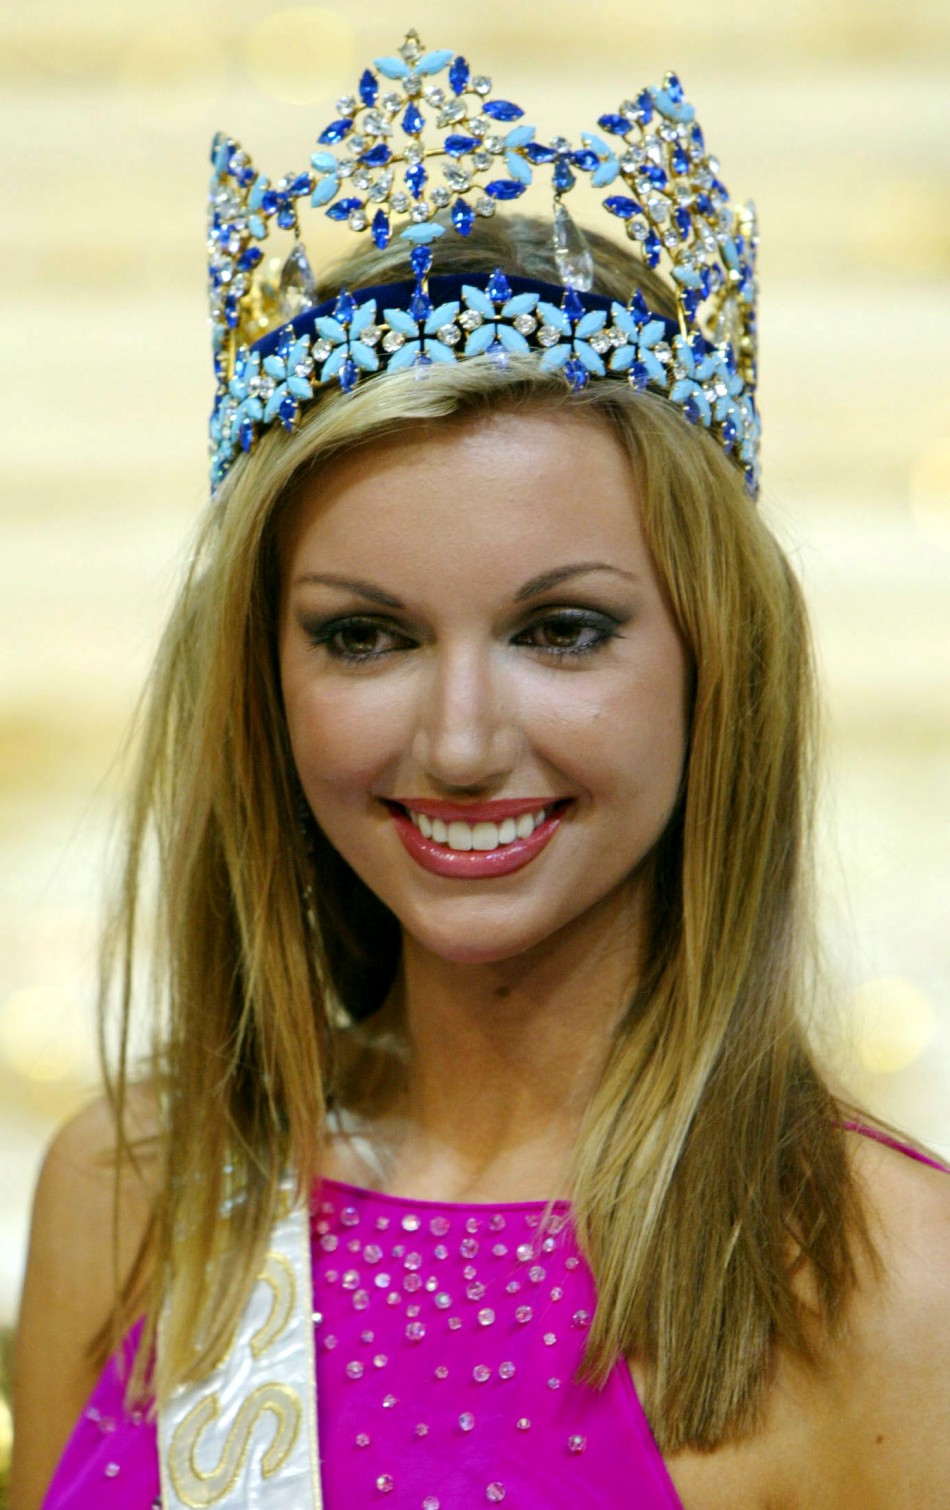 Miss World 2003